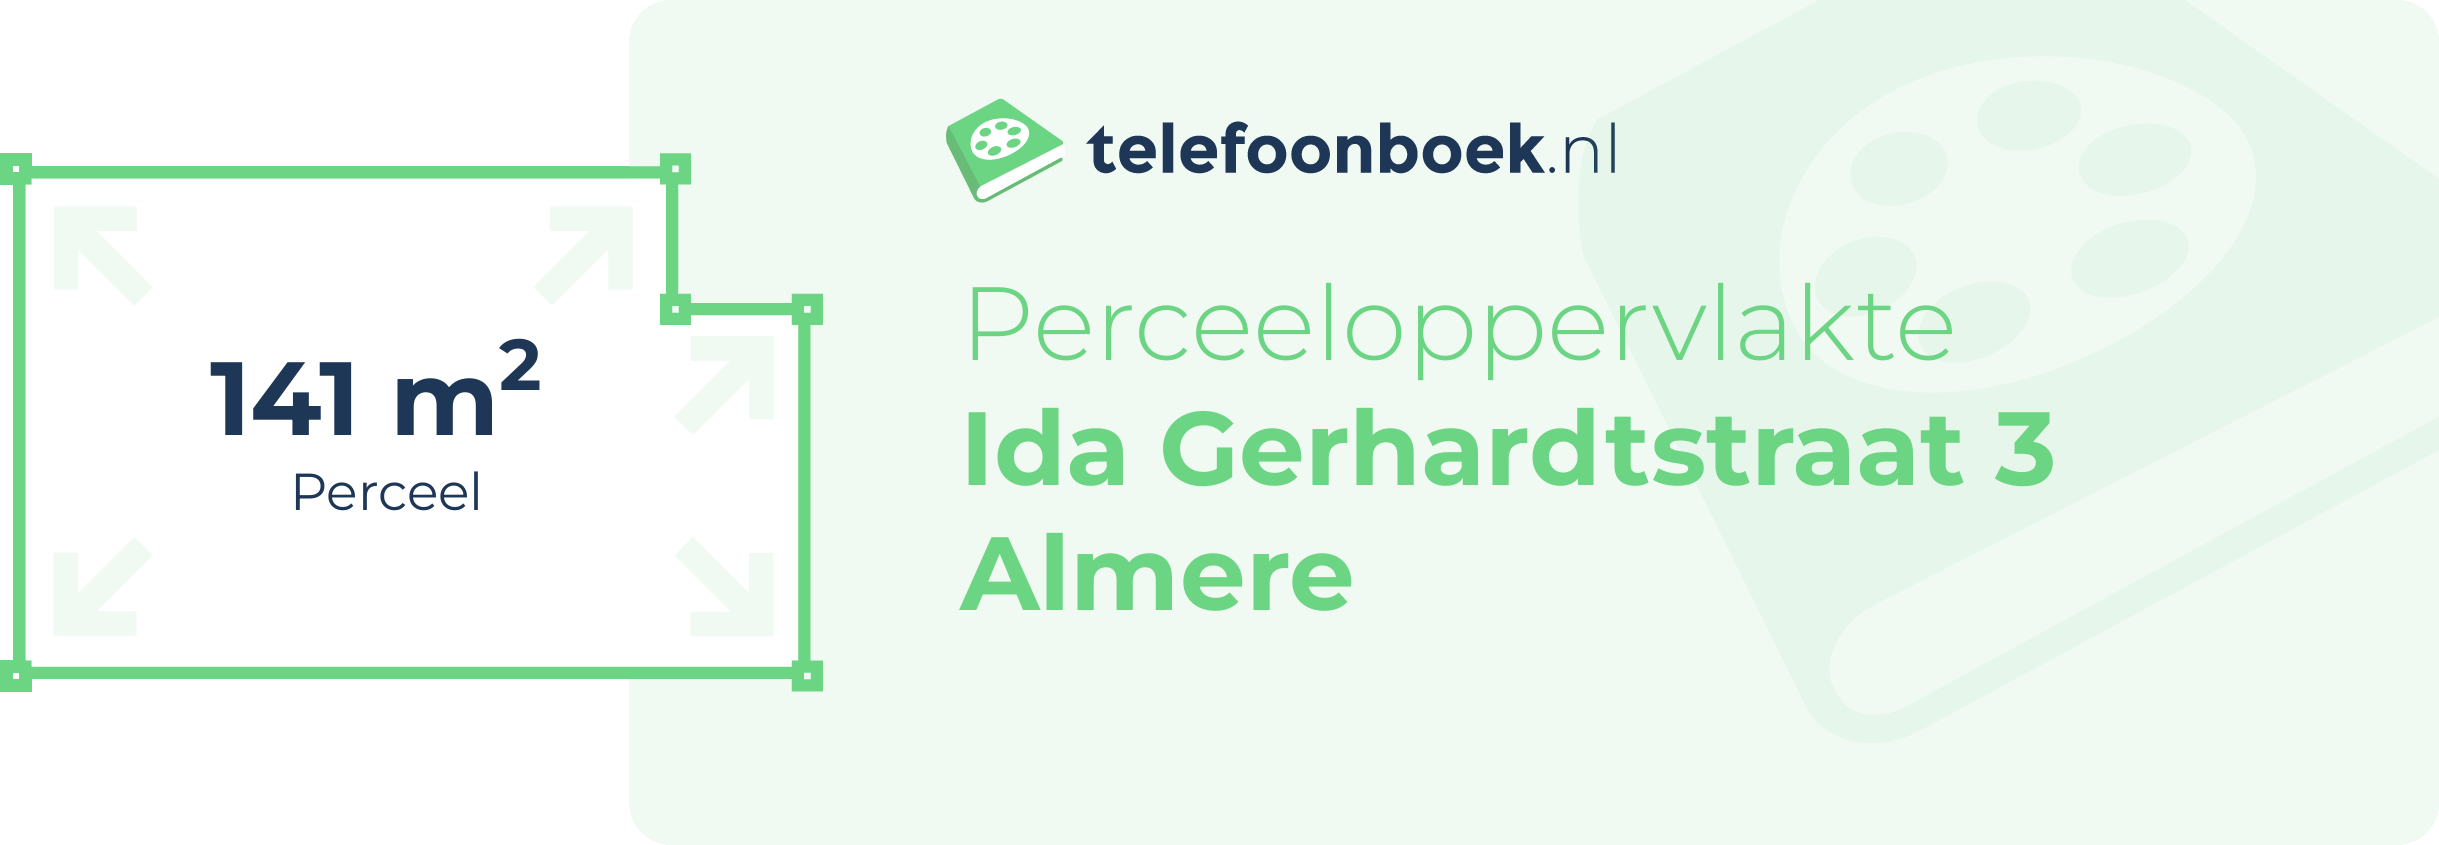 Perceeloppervlakte Ida Gerhardtstraat 3 Almere